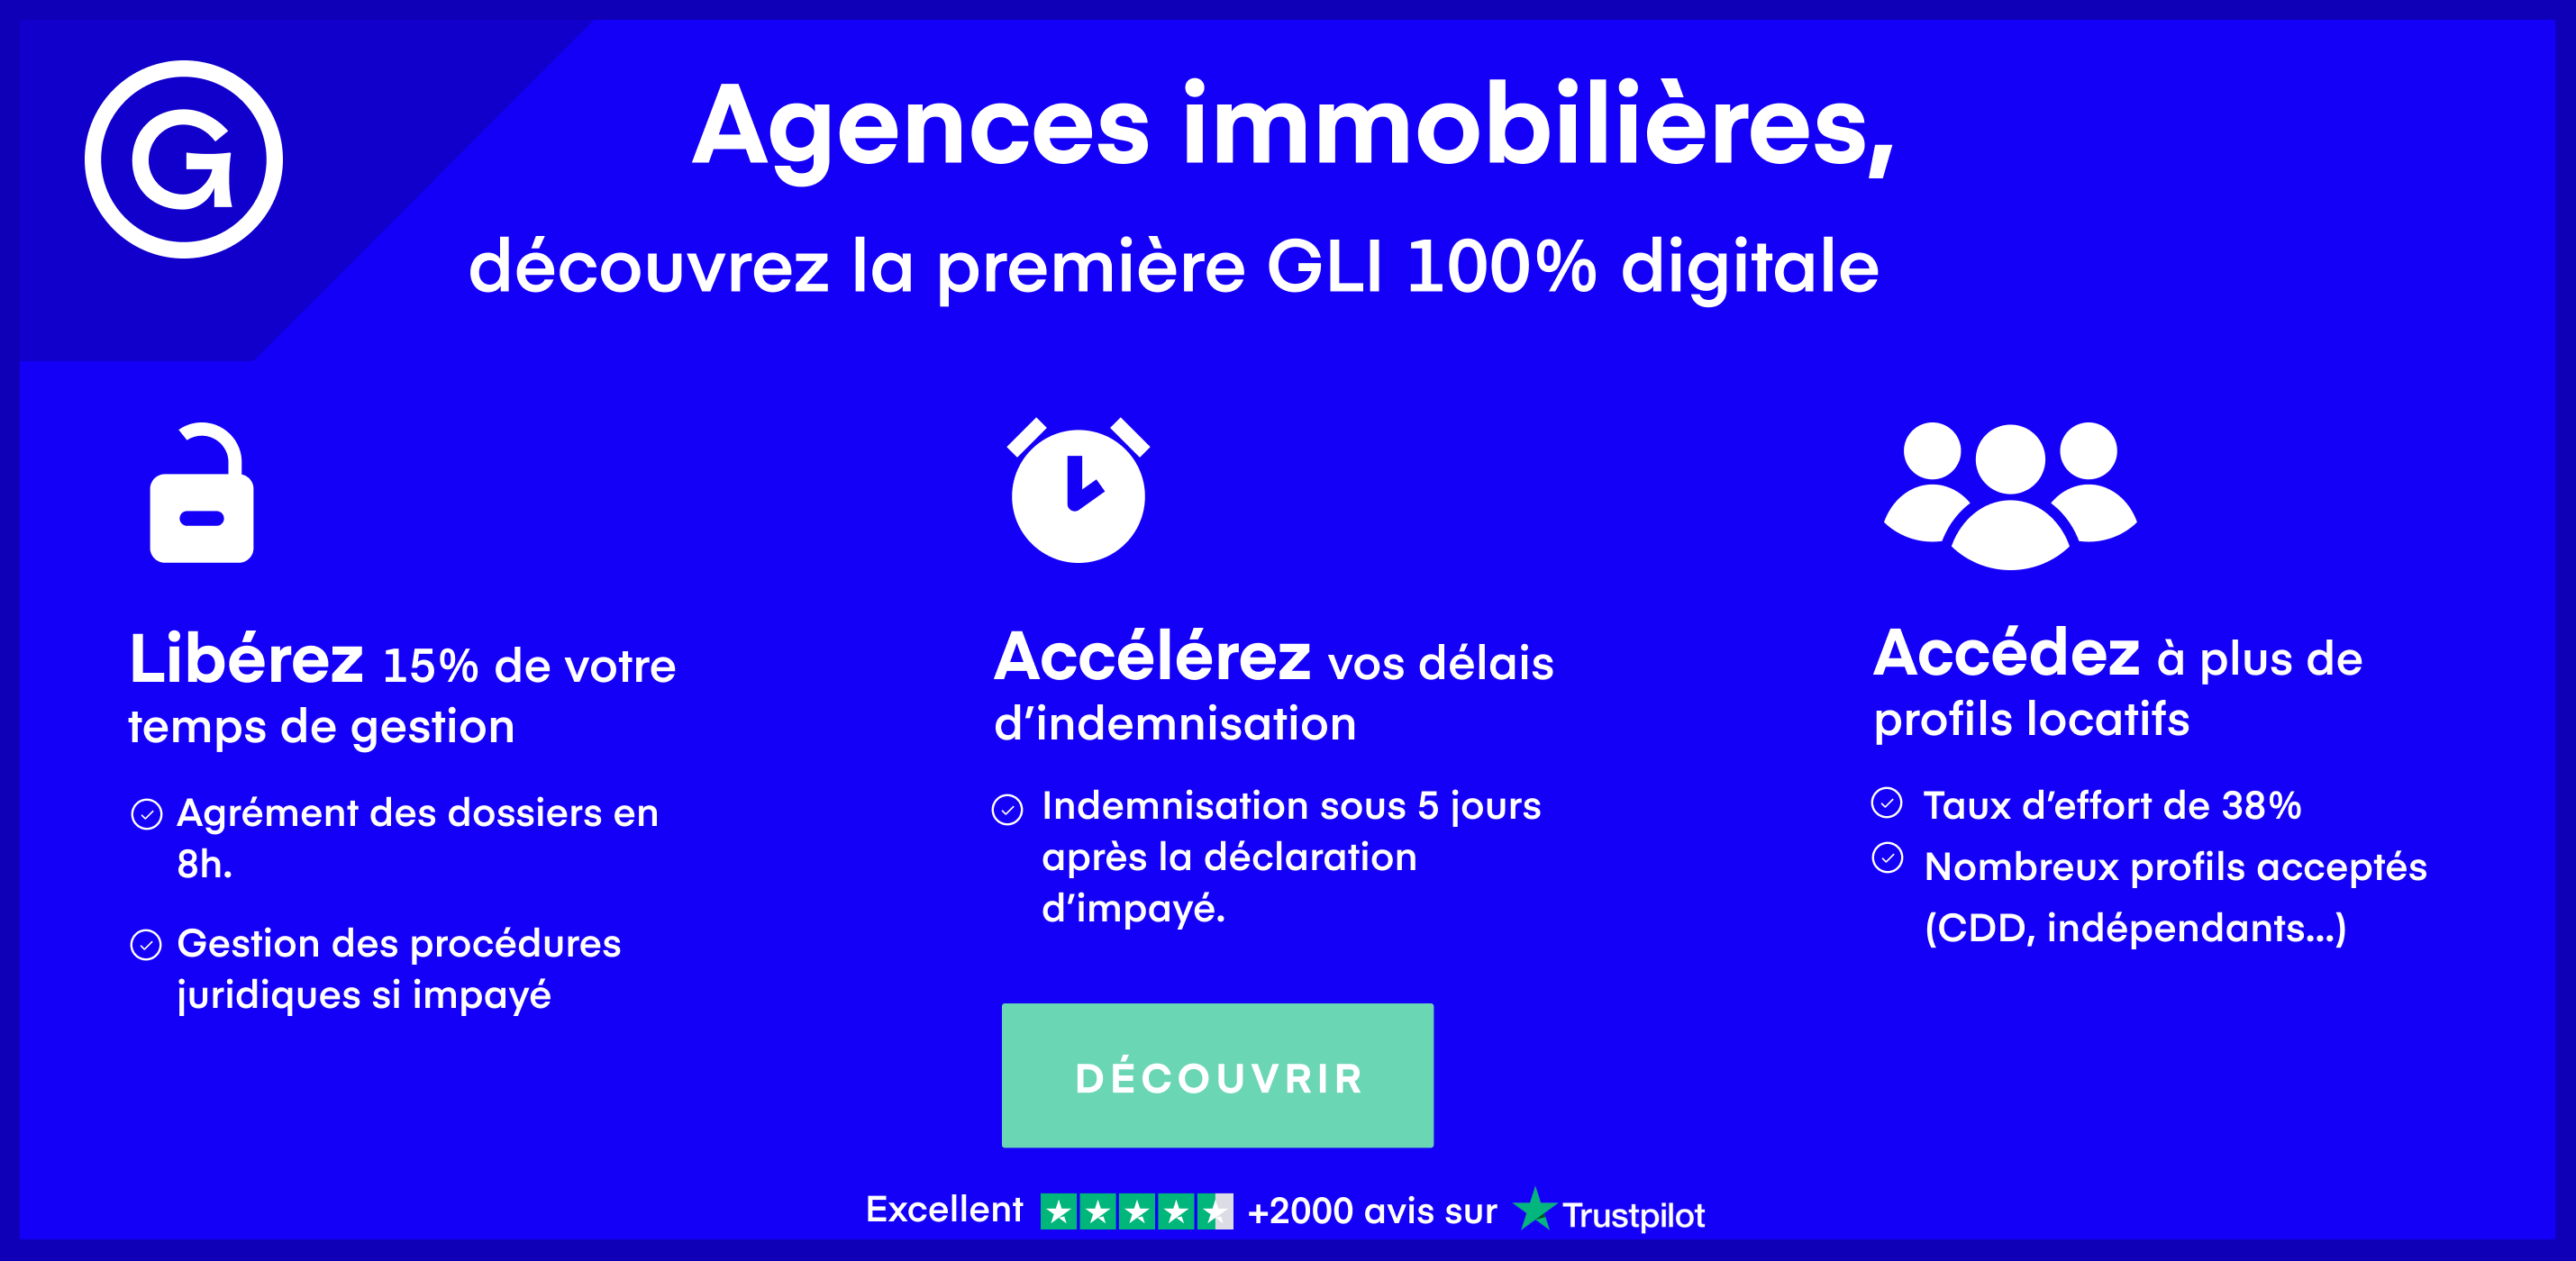 Agence immo première GLI 100% digitale